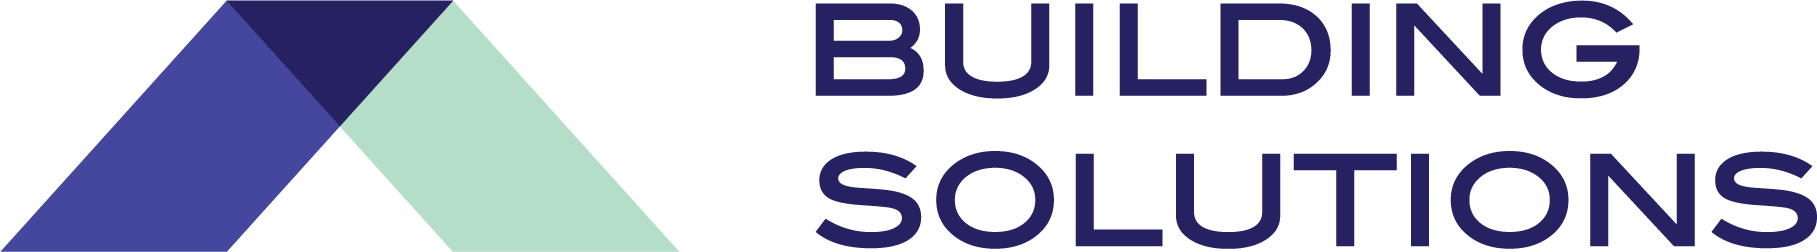 Building Solutions Ltd 2017 Logo